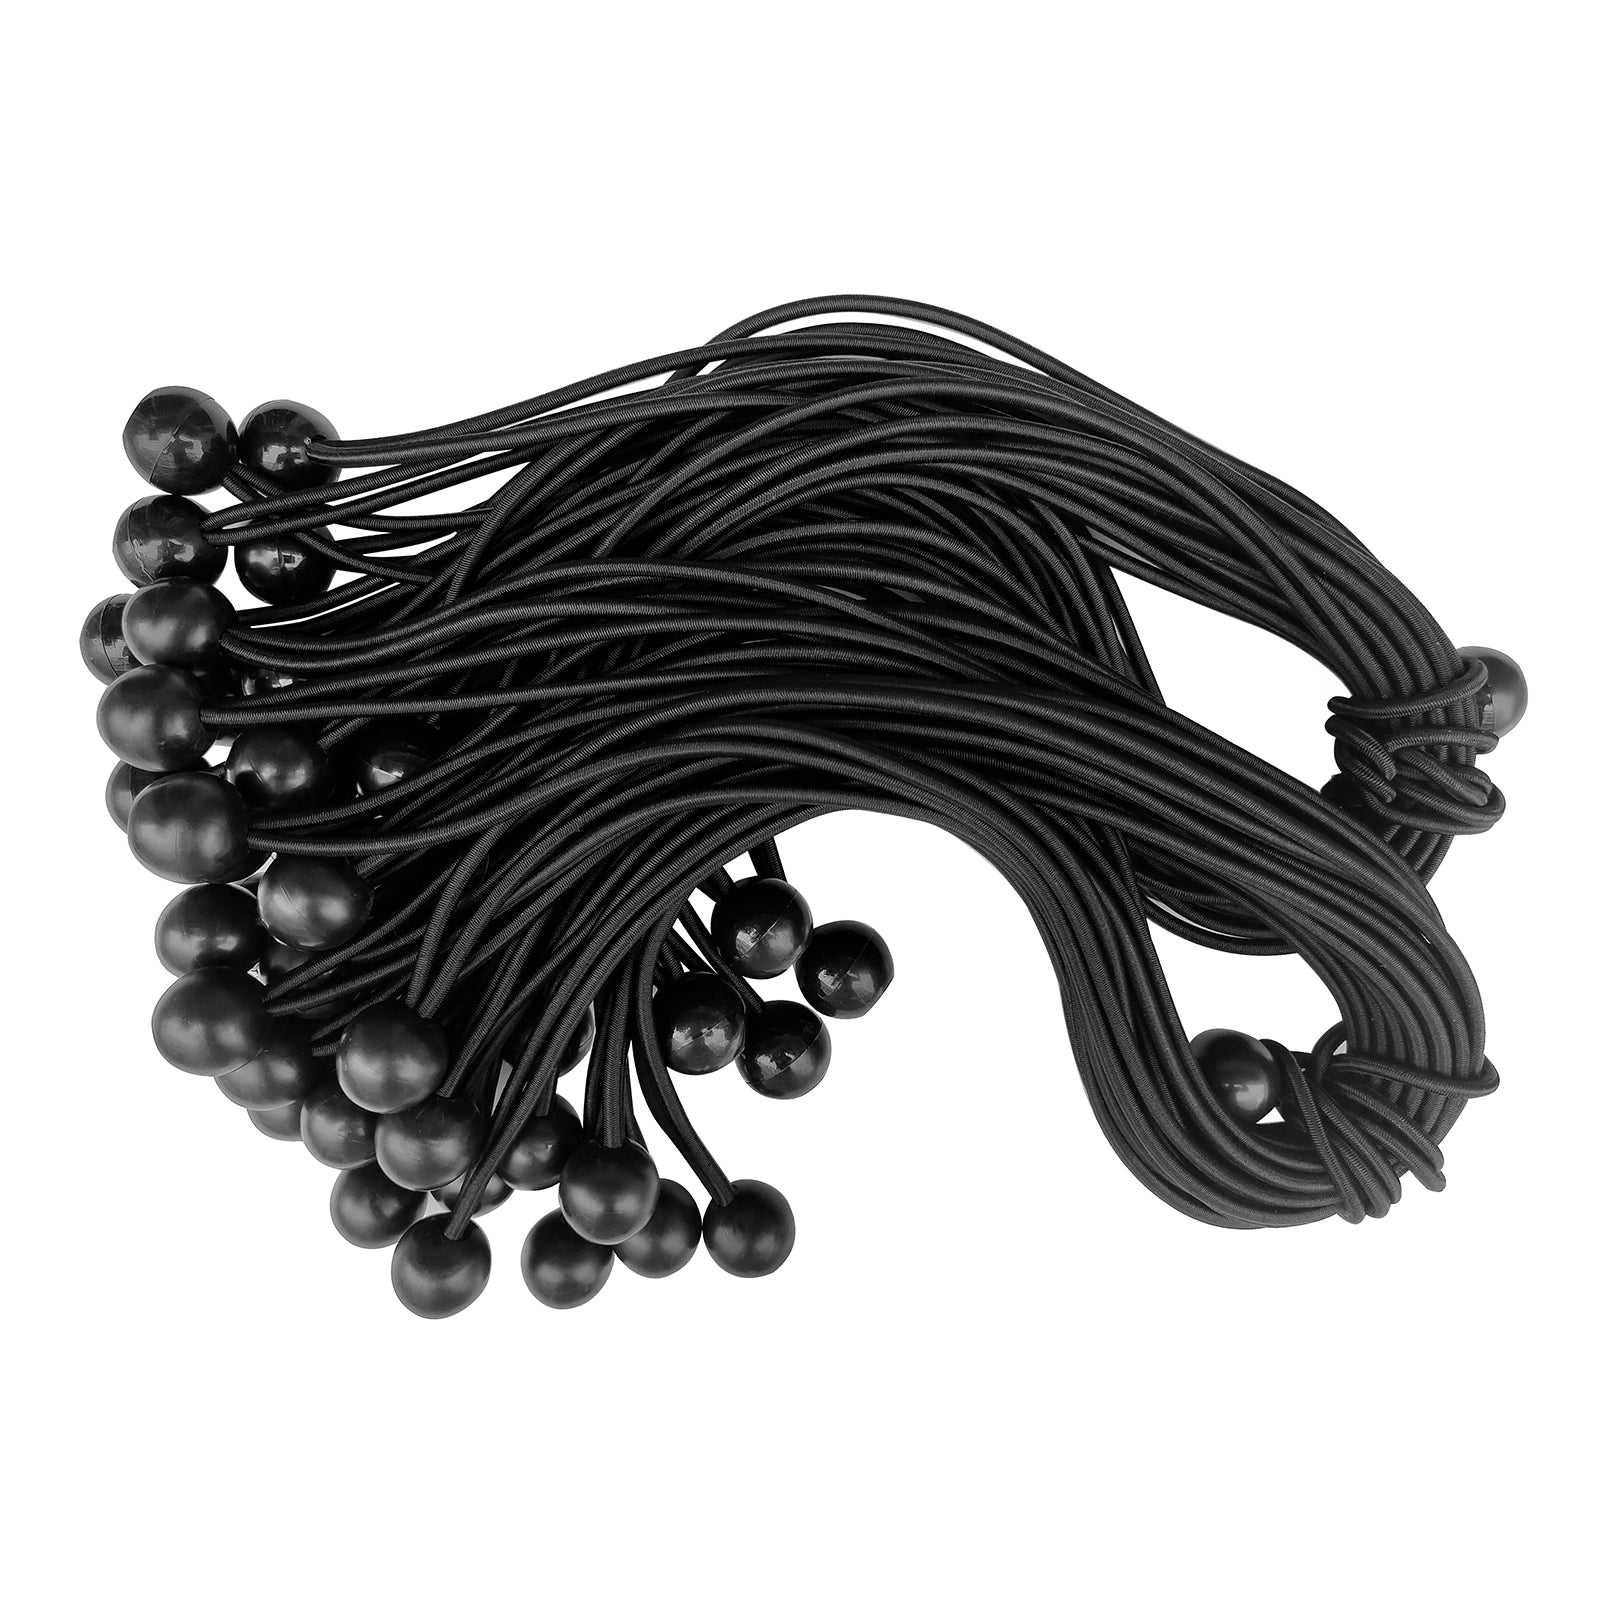 Joneaz Bungee Balls Cord, Black Bungee Cord for Canopy Tarp,UV Resista